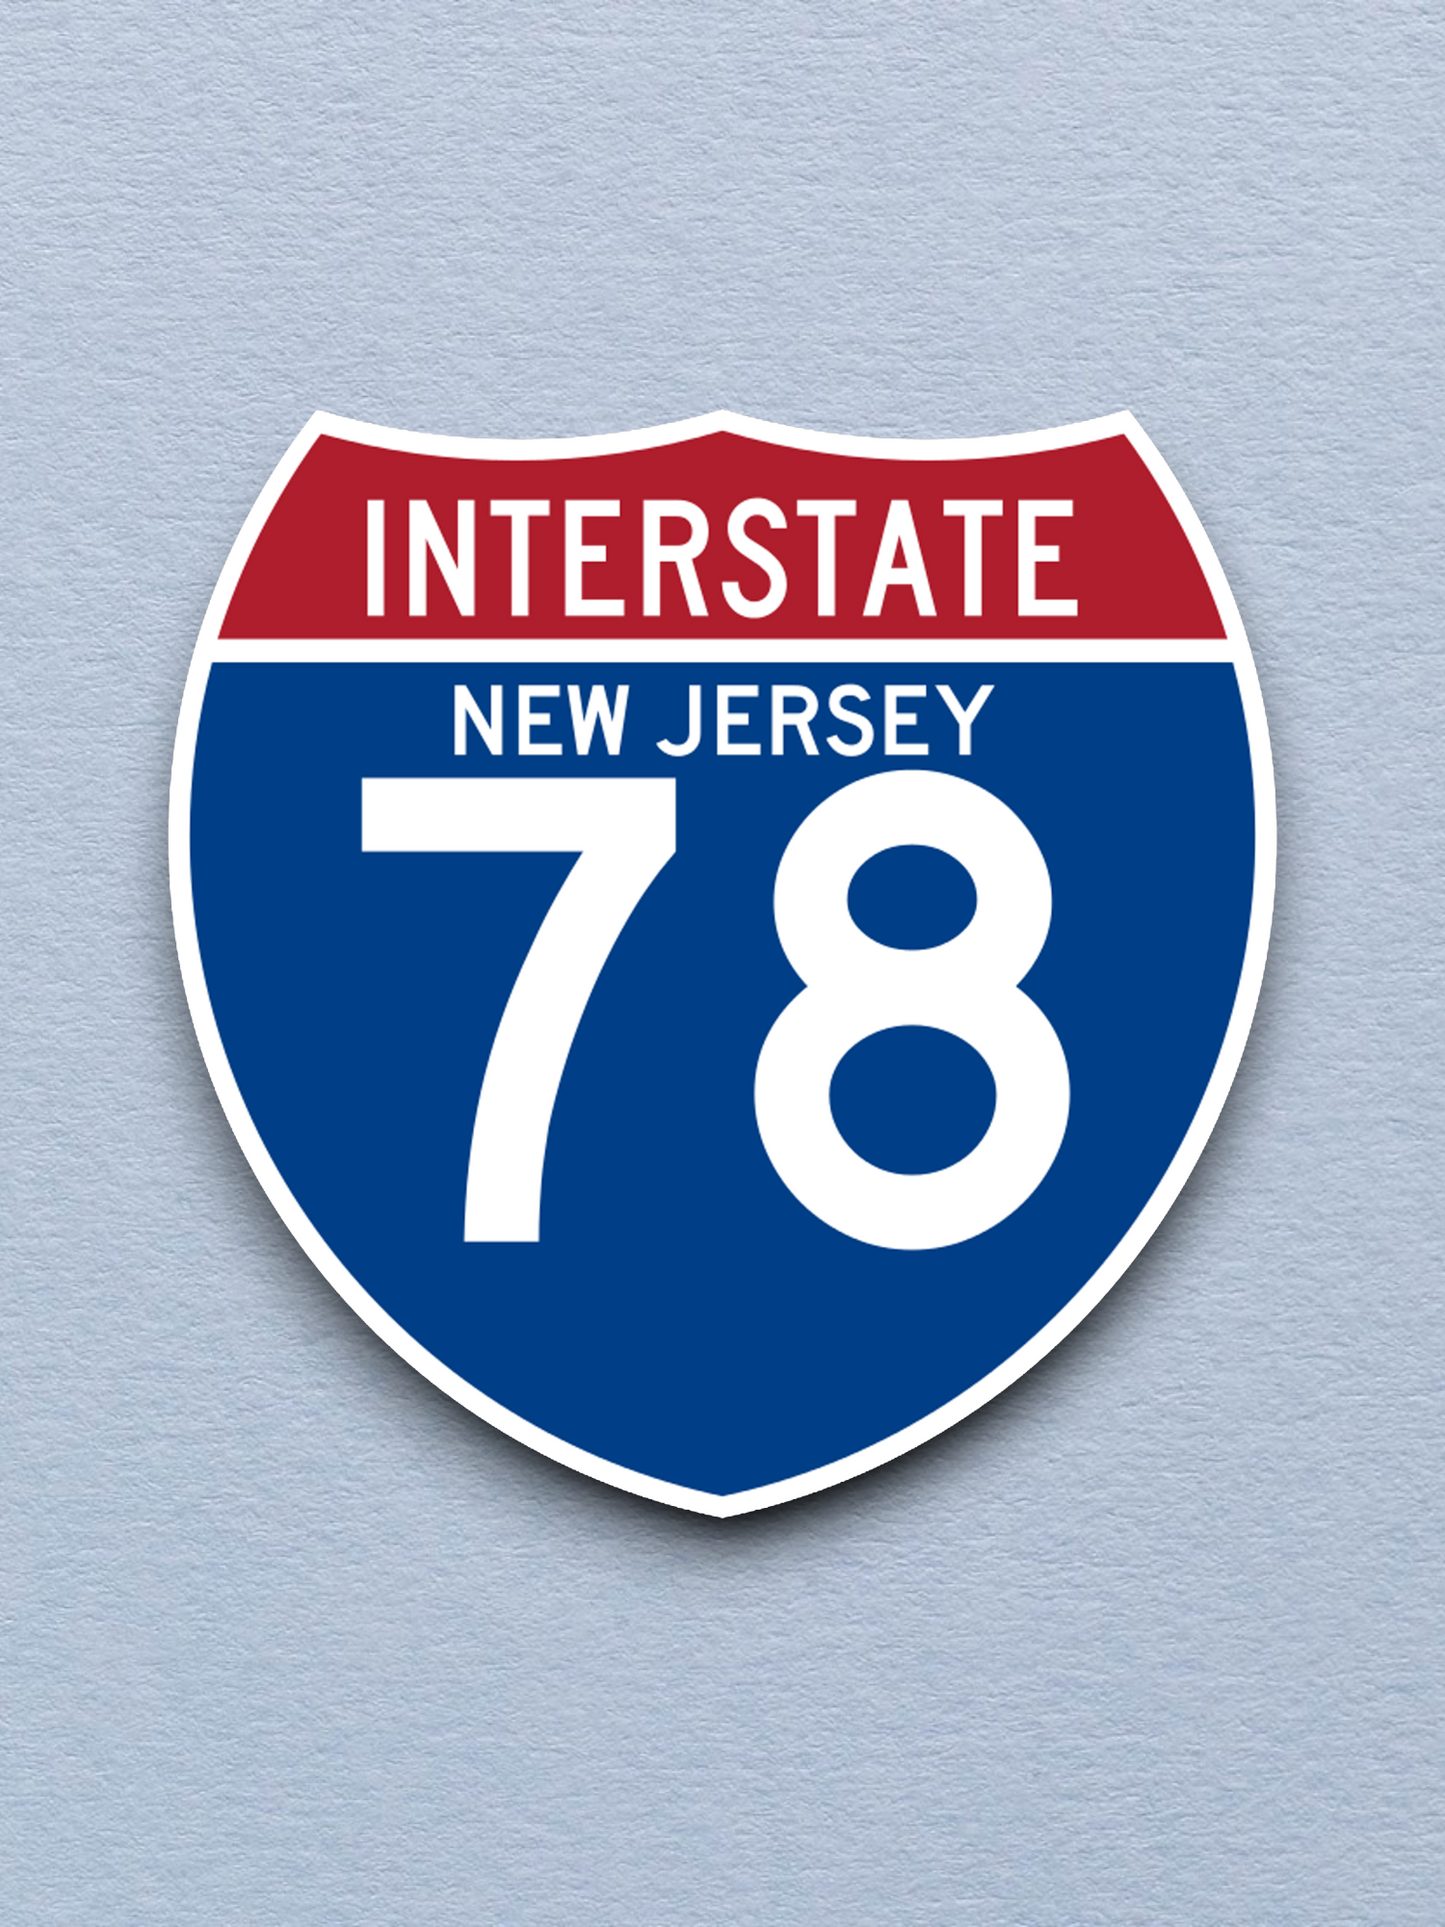 Interstate I-78 New Jersey - Road Sign Sticker